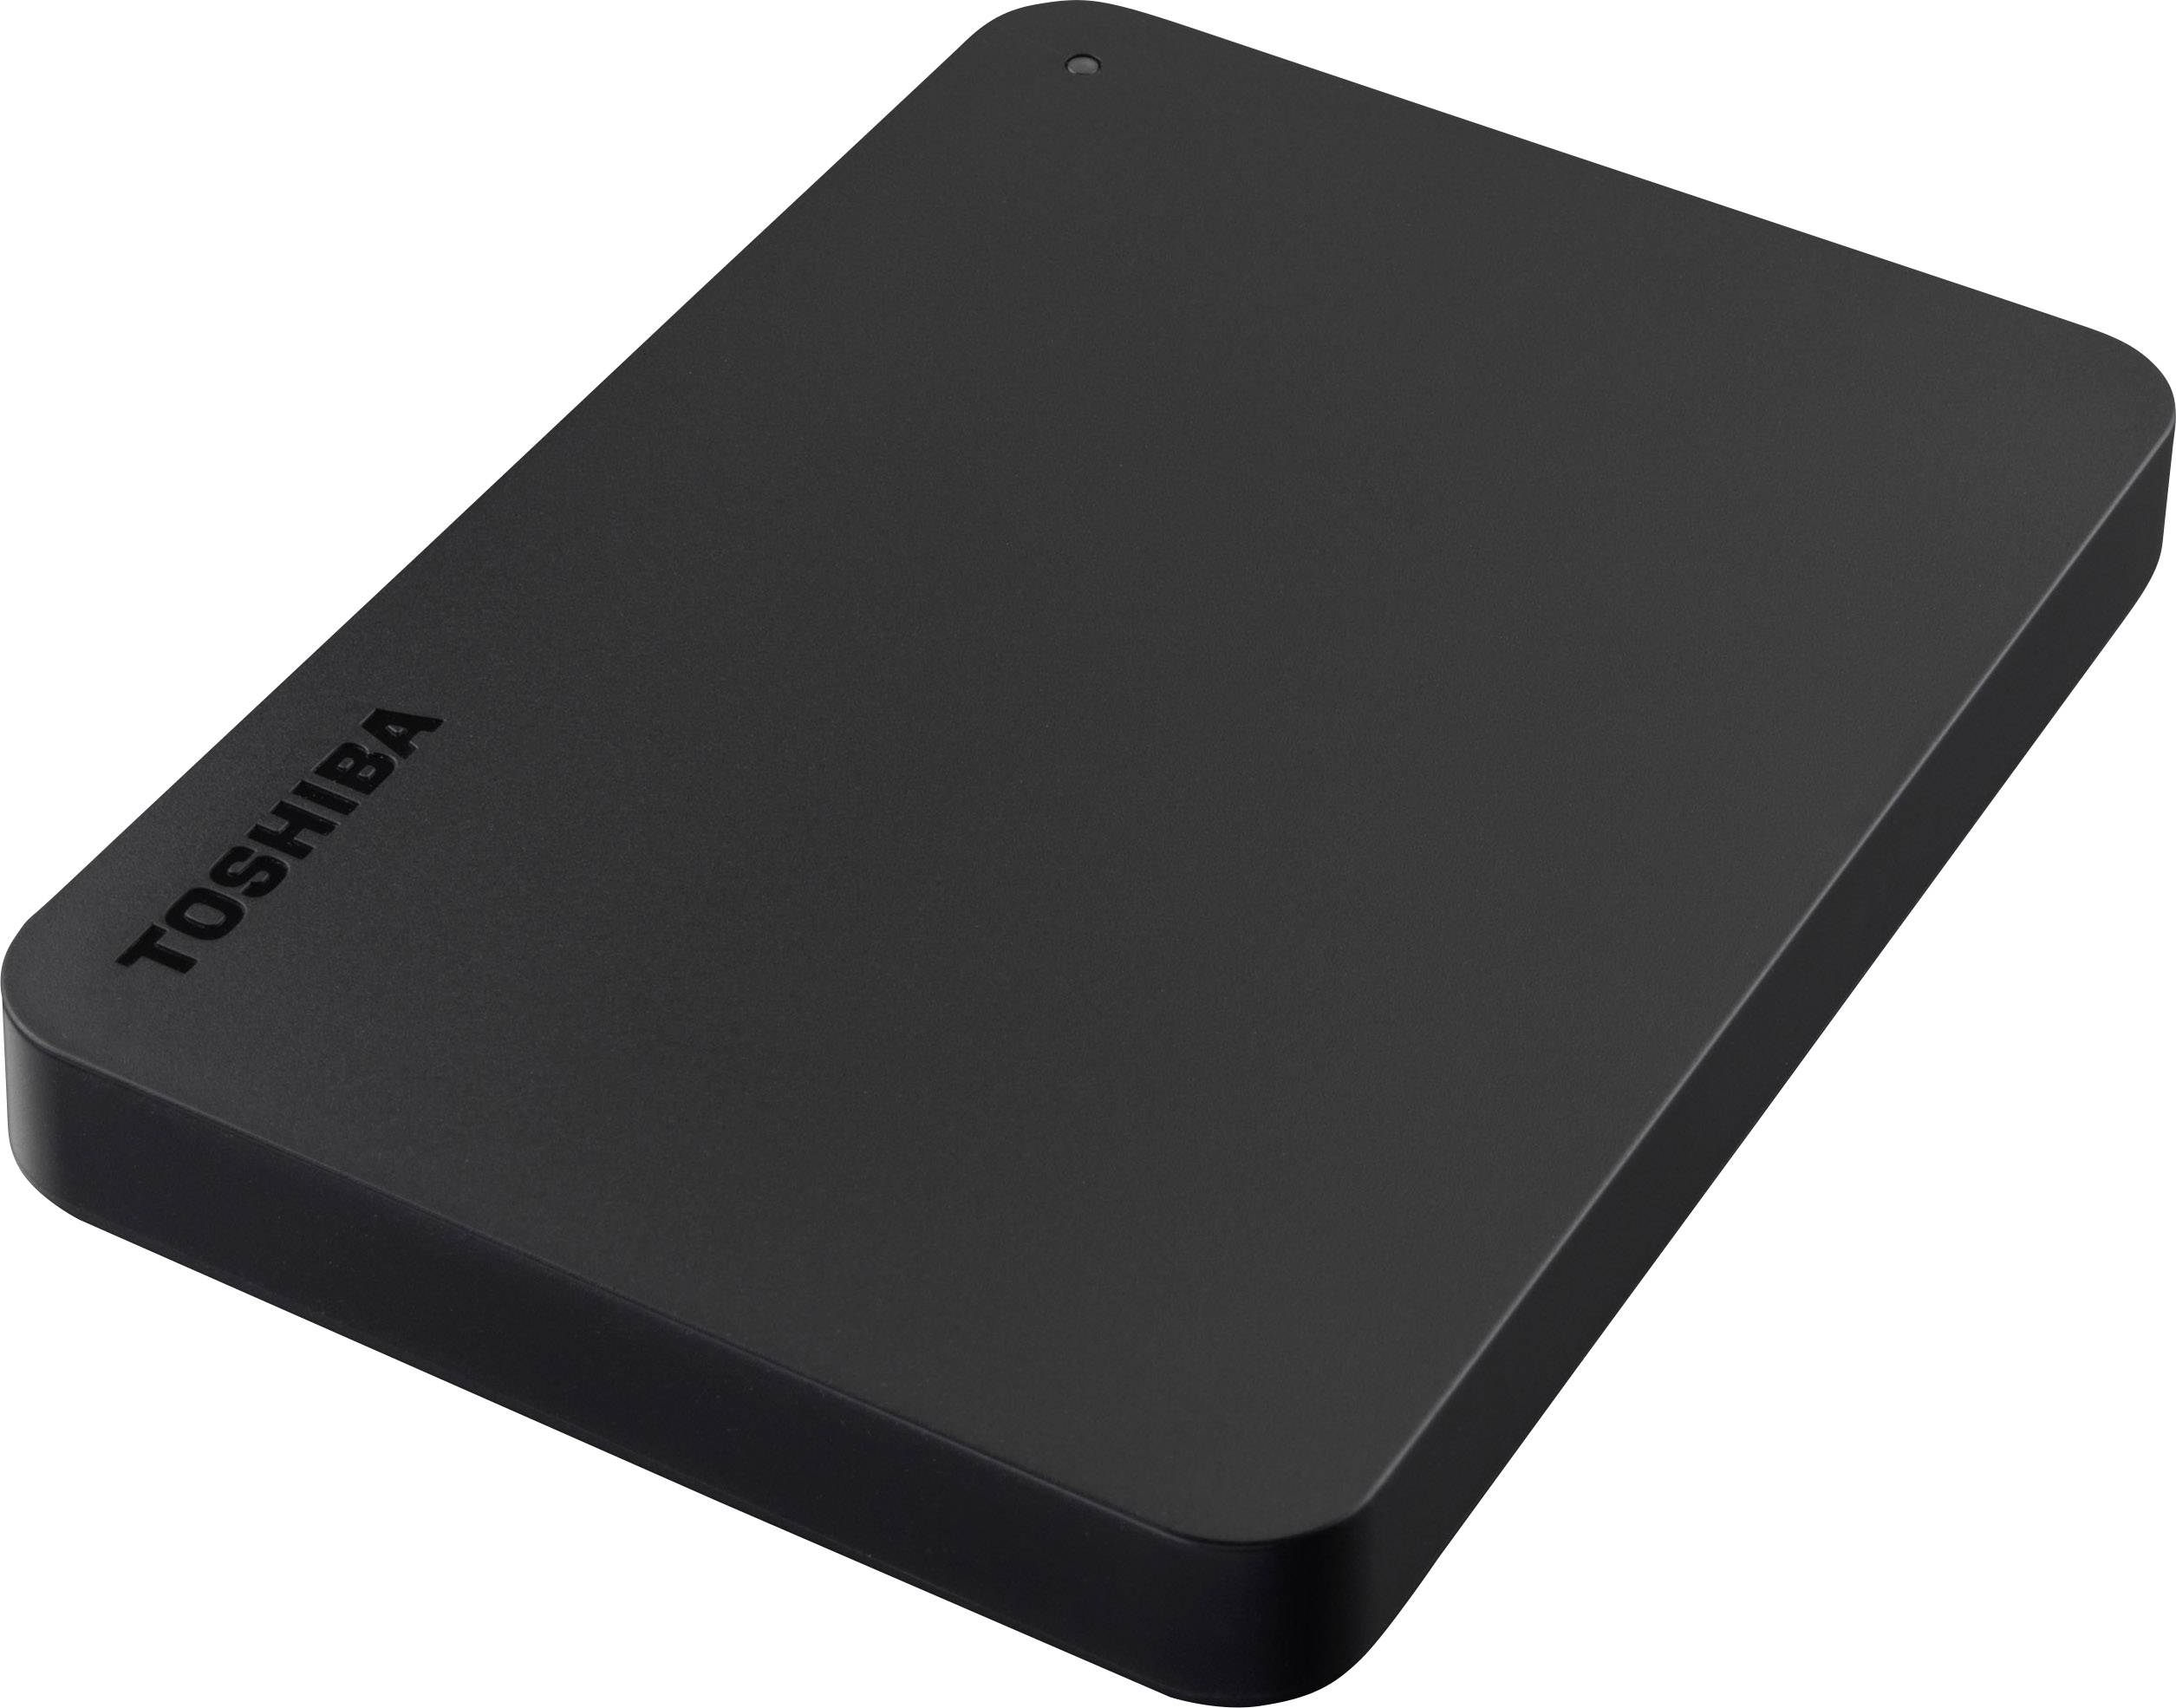 Gætte I udlandet mavepine Toshiba Canvio Basics 4 TB Ekstern harddisk 6,35 cm (2,5") USB 3.2 Gen 1  (USB 3.0 M | Conradelektronik.dk